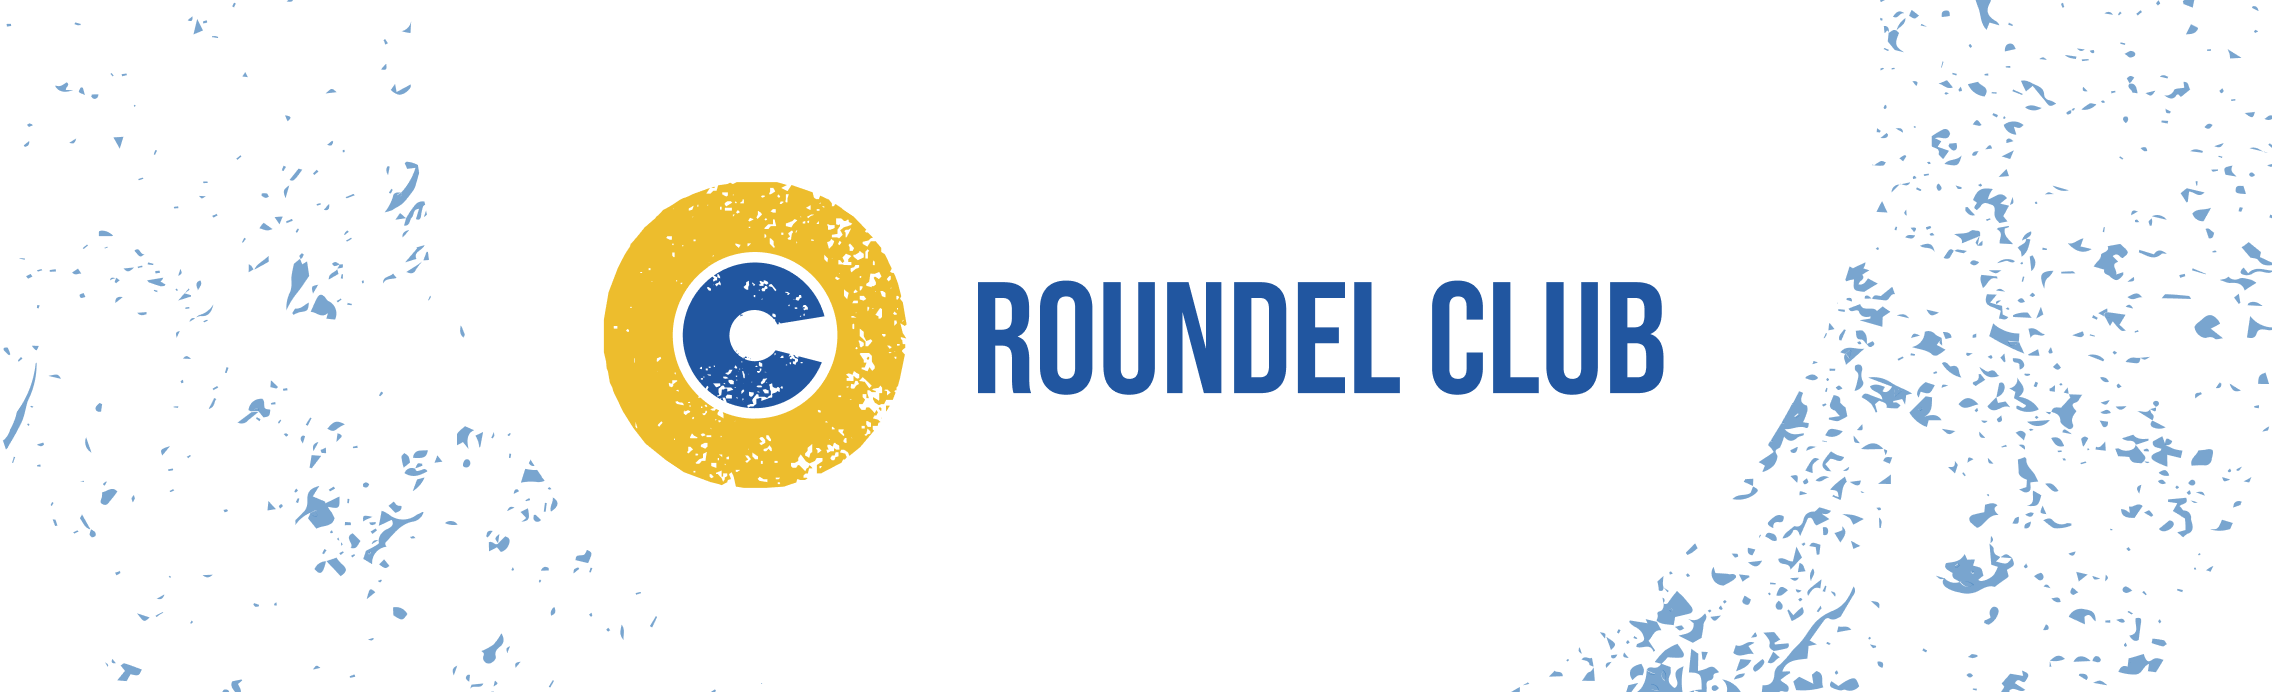 rondel-club